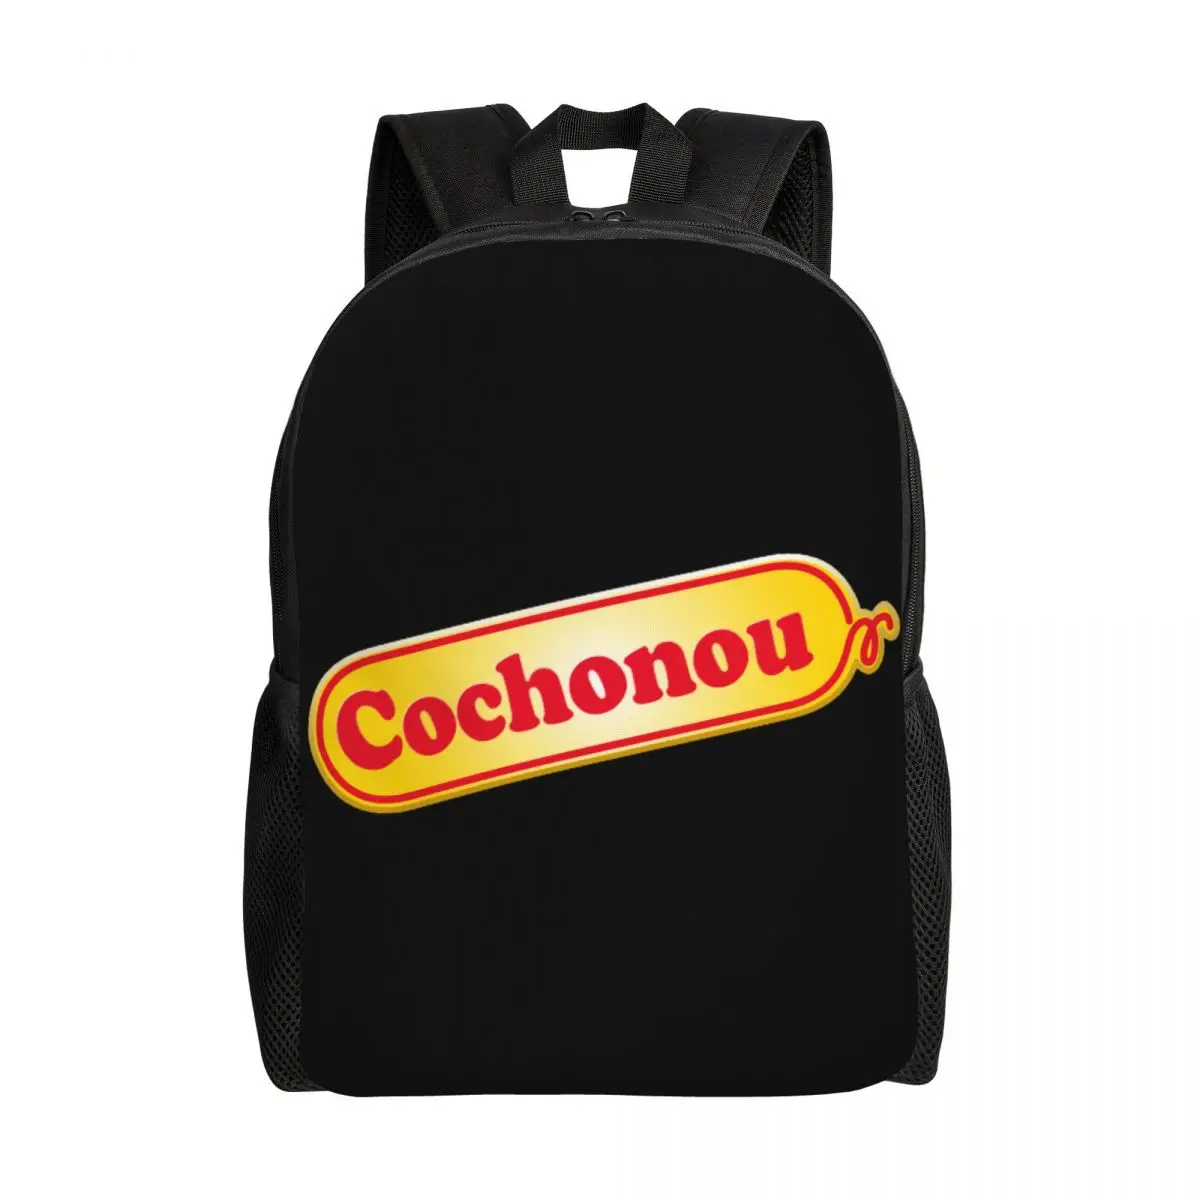 

Custom Cochonou Backpacks for Women Men School College Student Bookbag Fits 15 Inch Laptop Bags